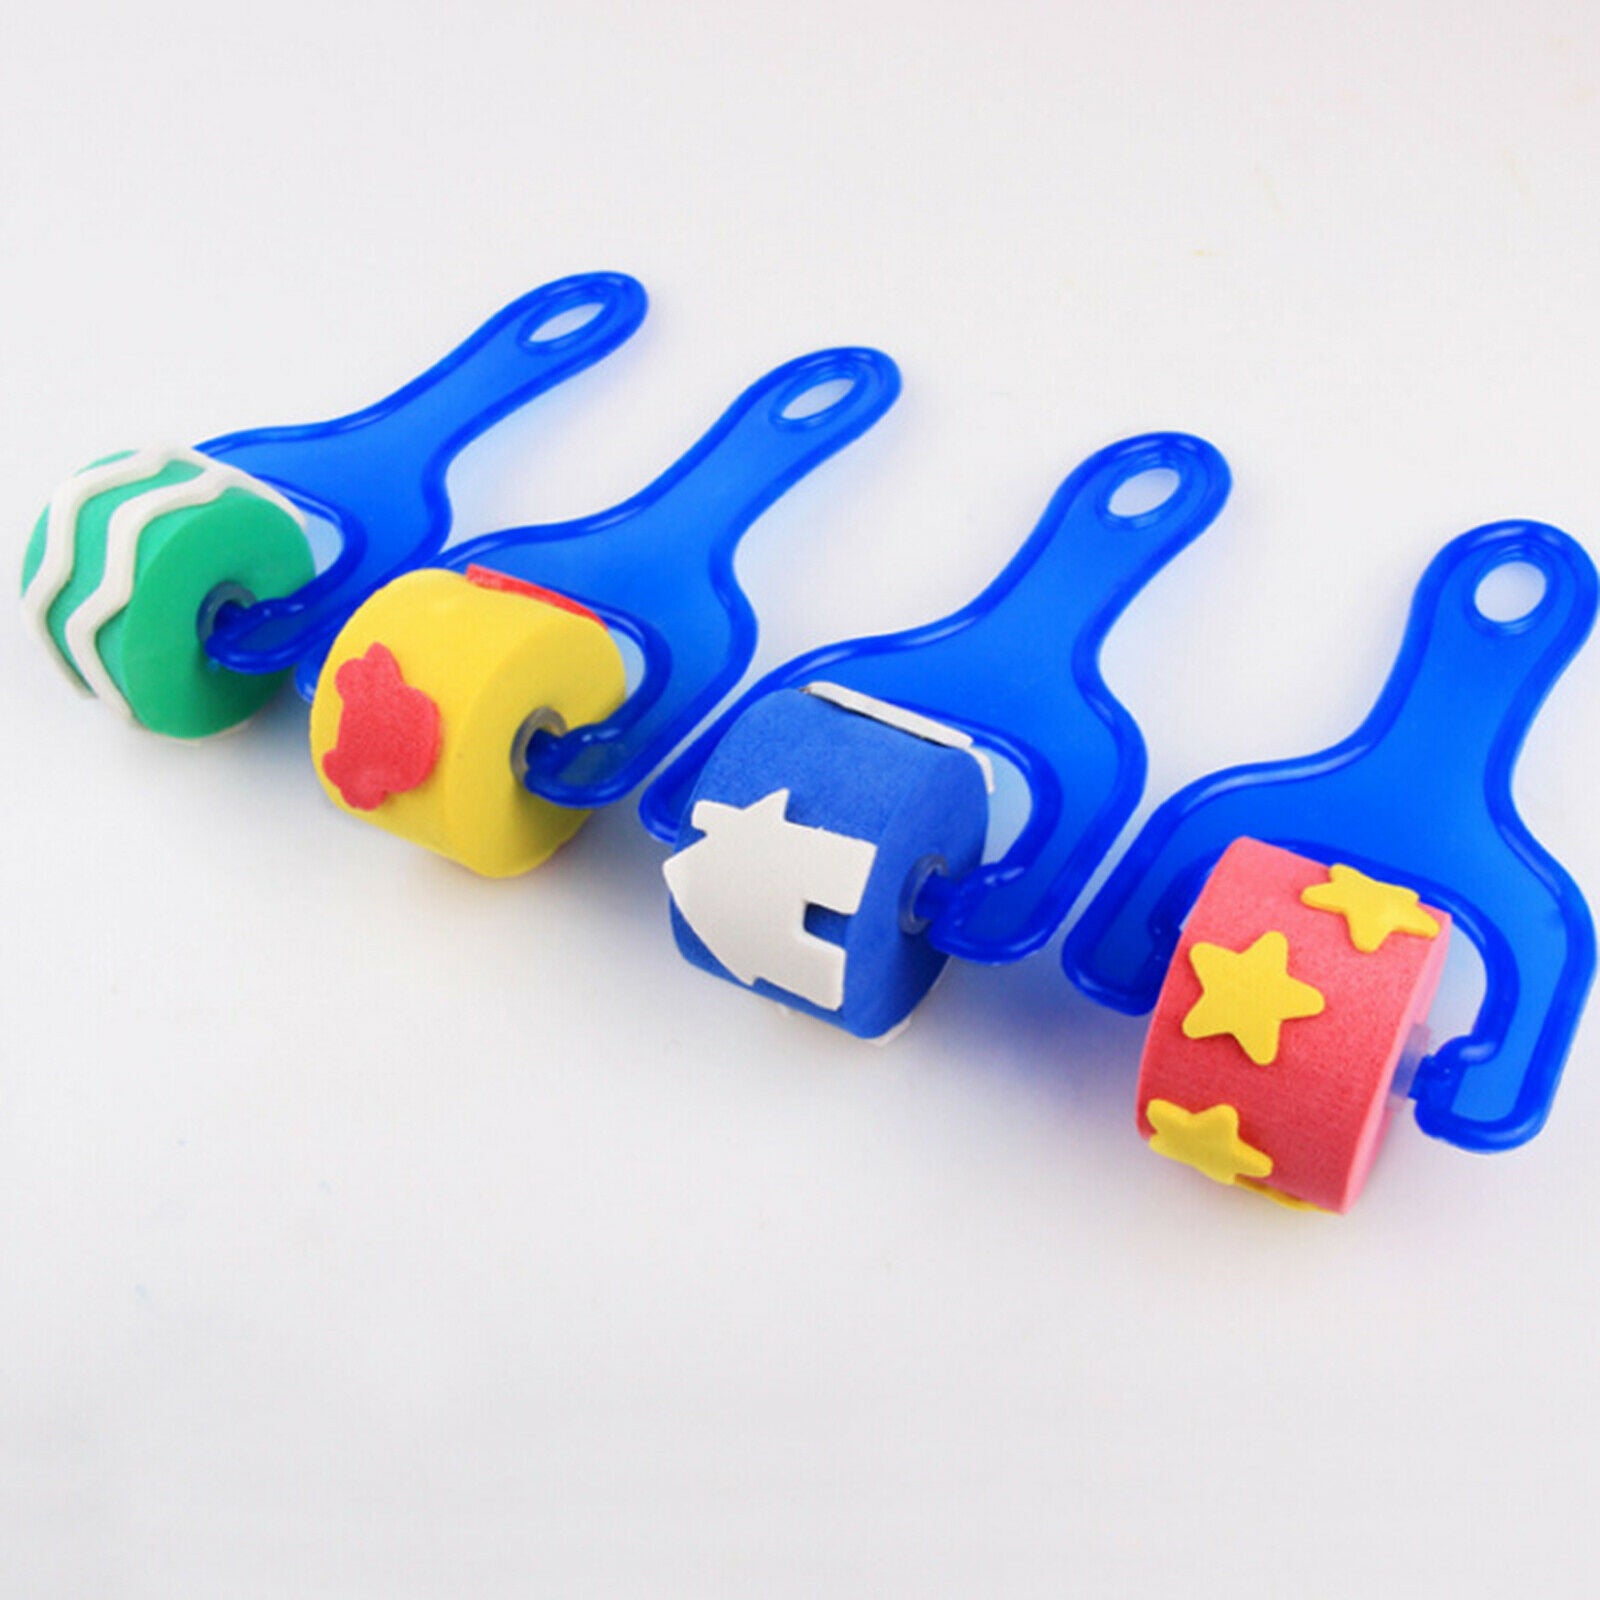 Washable Mini Educational Toys Brush Sponge Seal for Children Early Learning